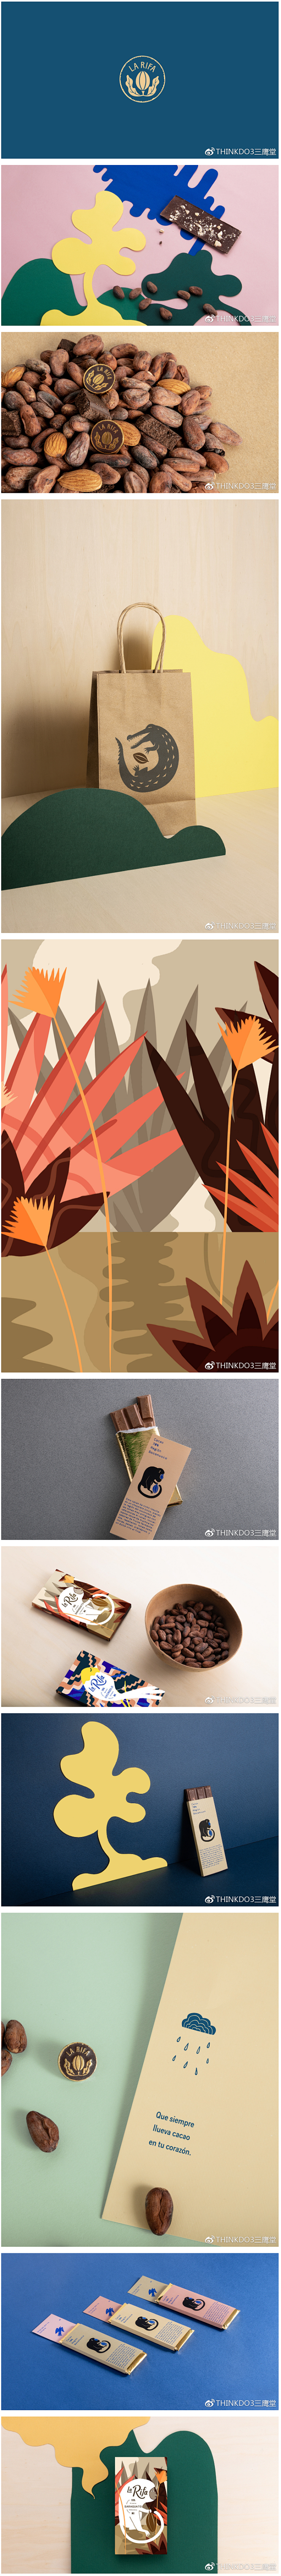 La Rifa巧克力品牌和包装设计